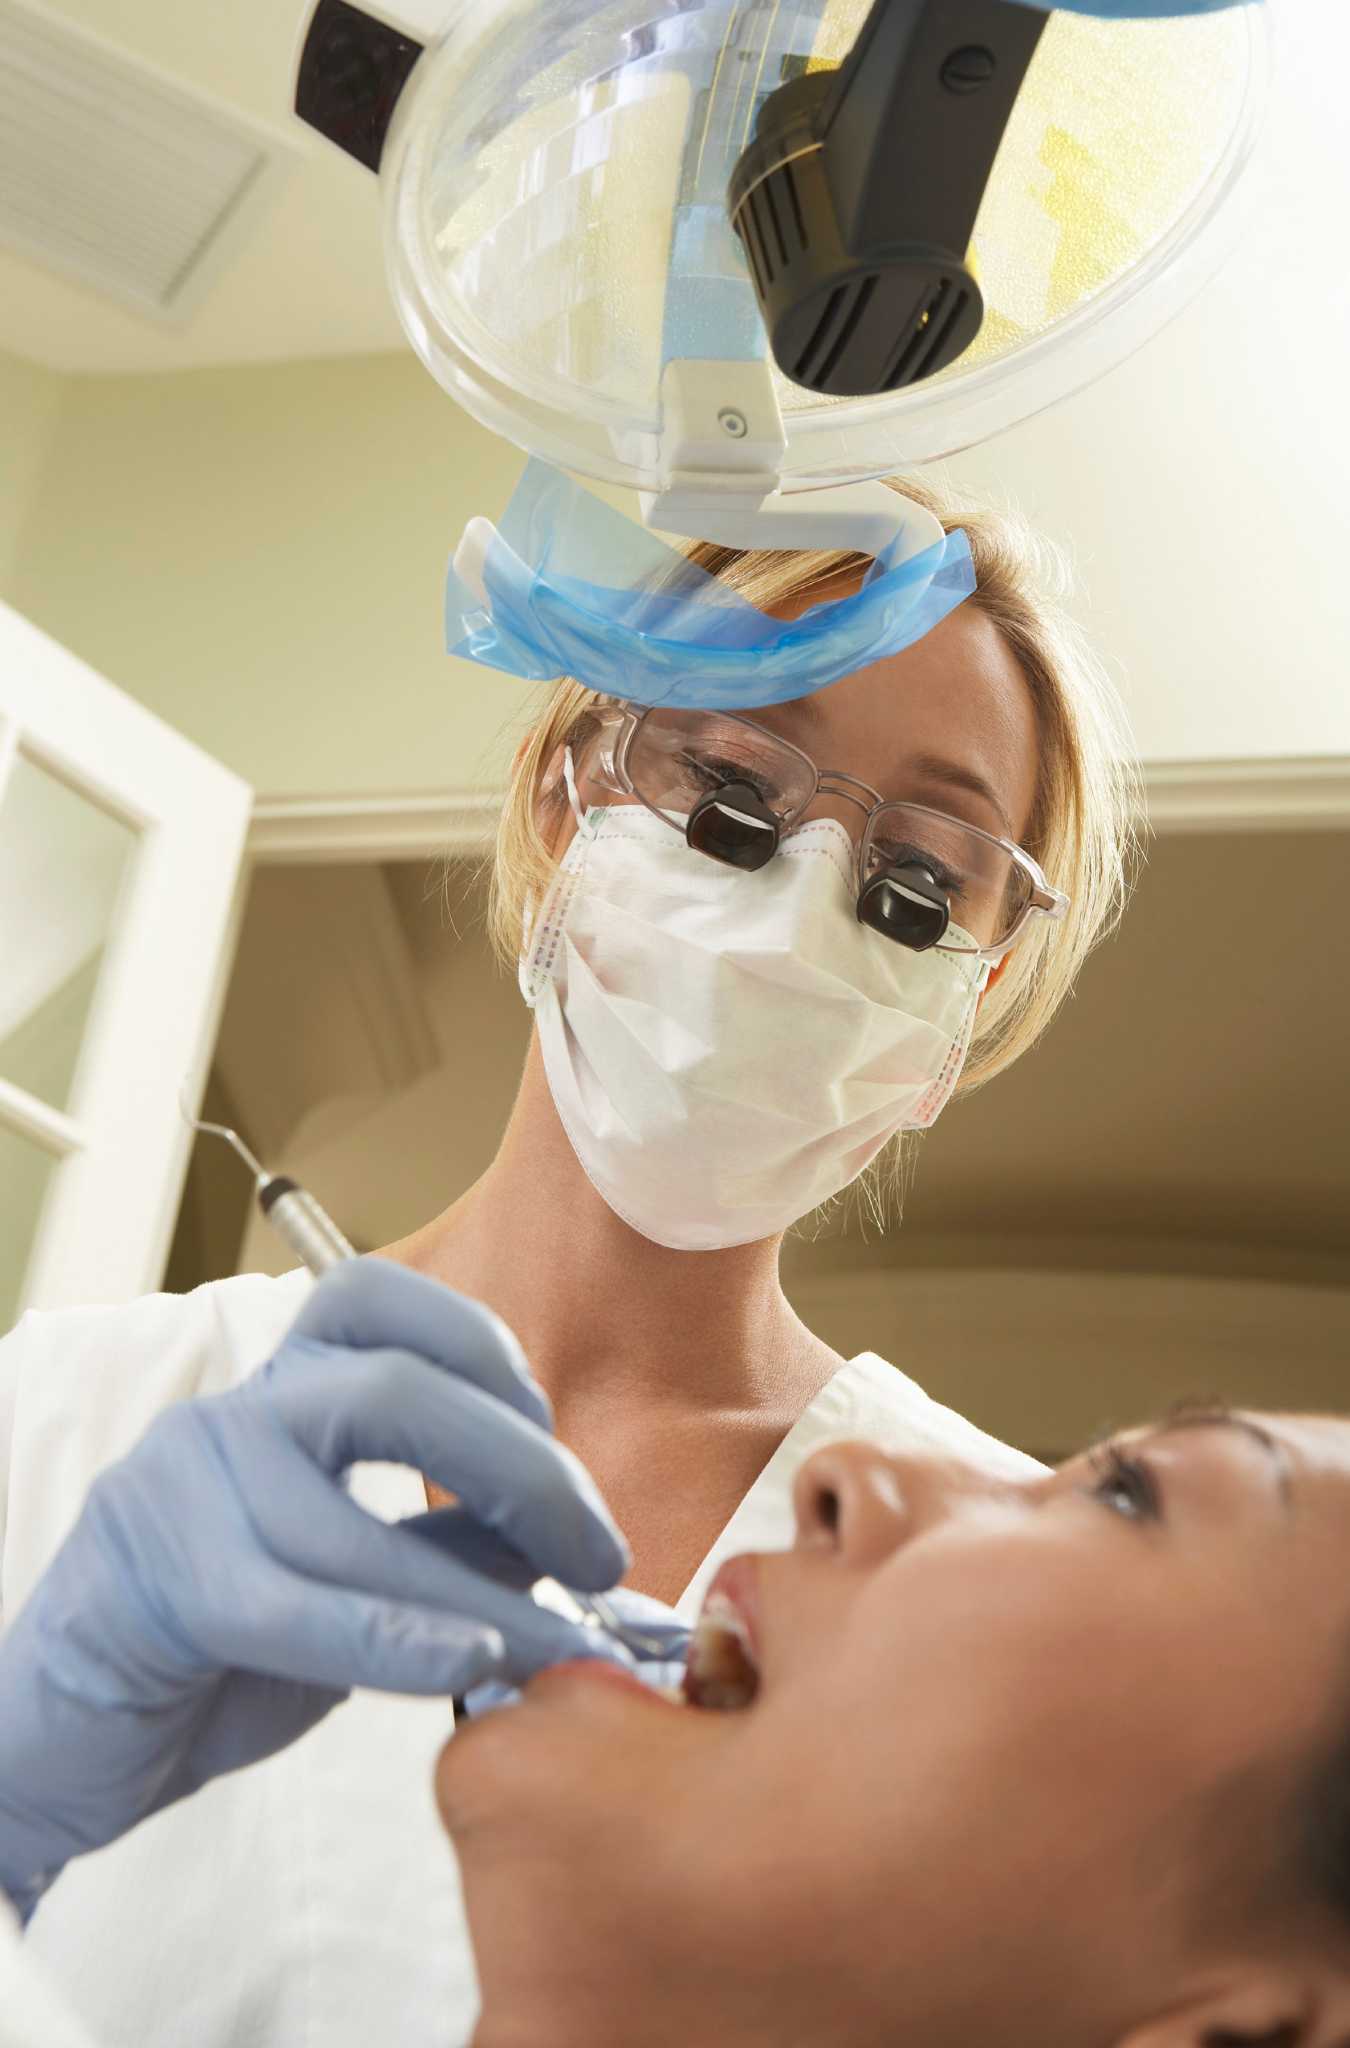 jobs Dental hygienist blow